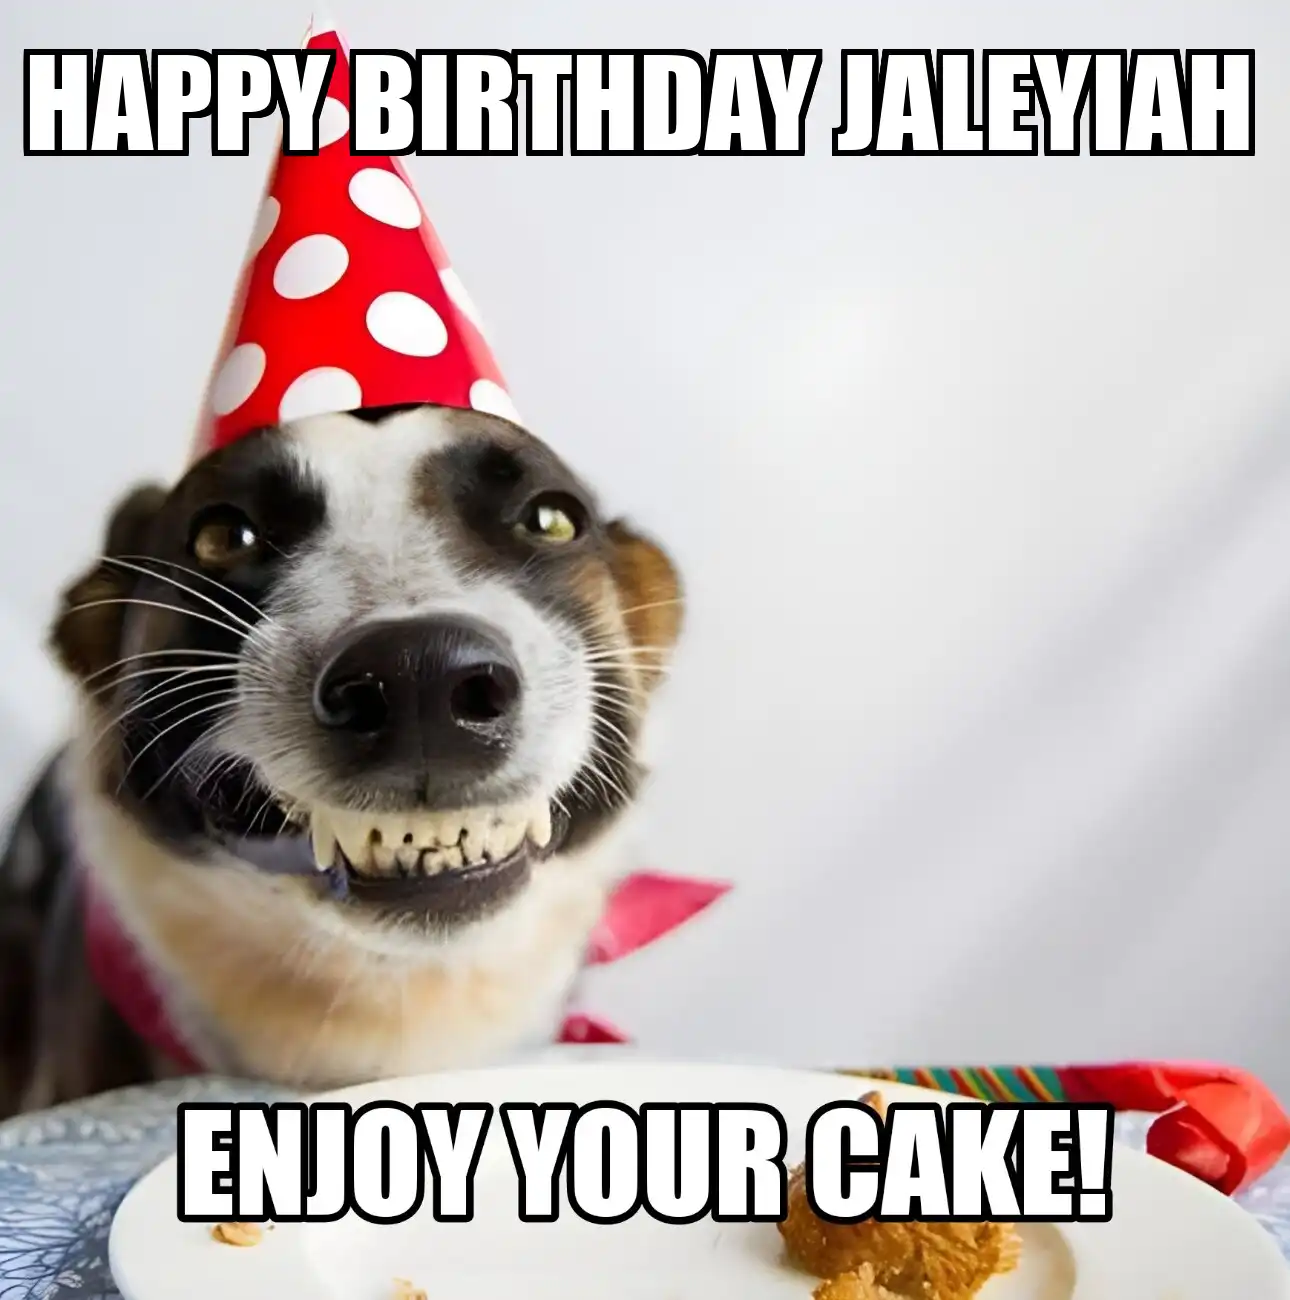 Happy Birthday Jaleyiah Enjoy Your Cake Dog Meme